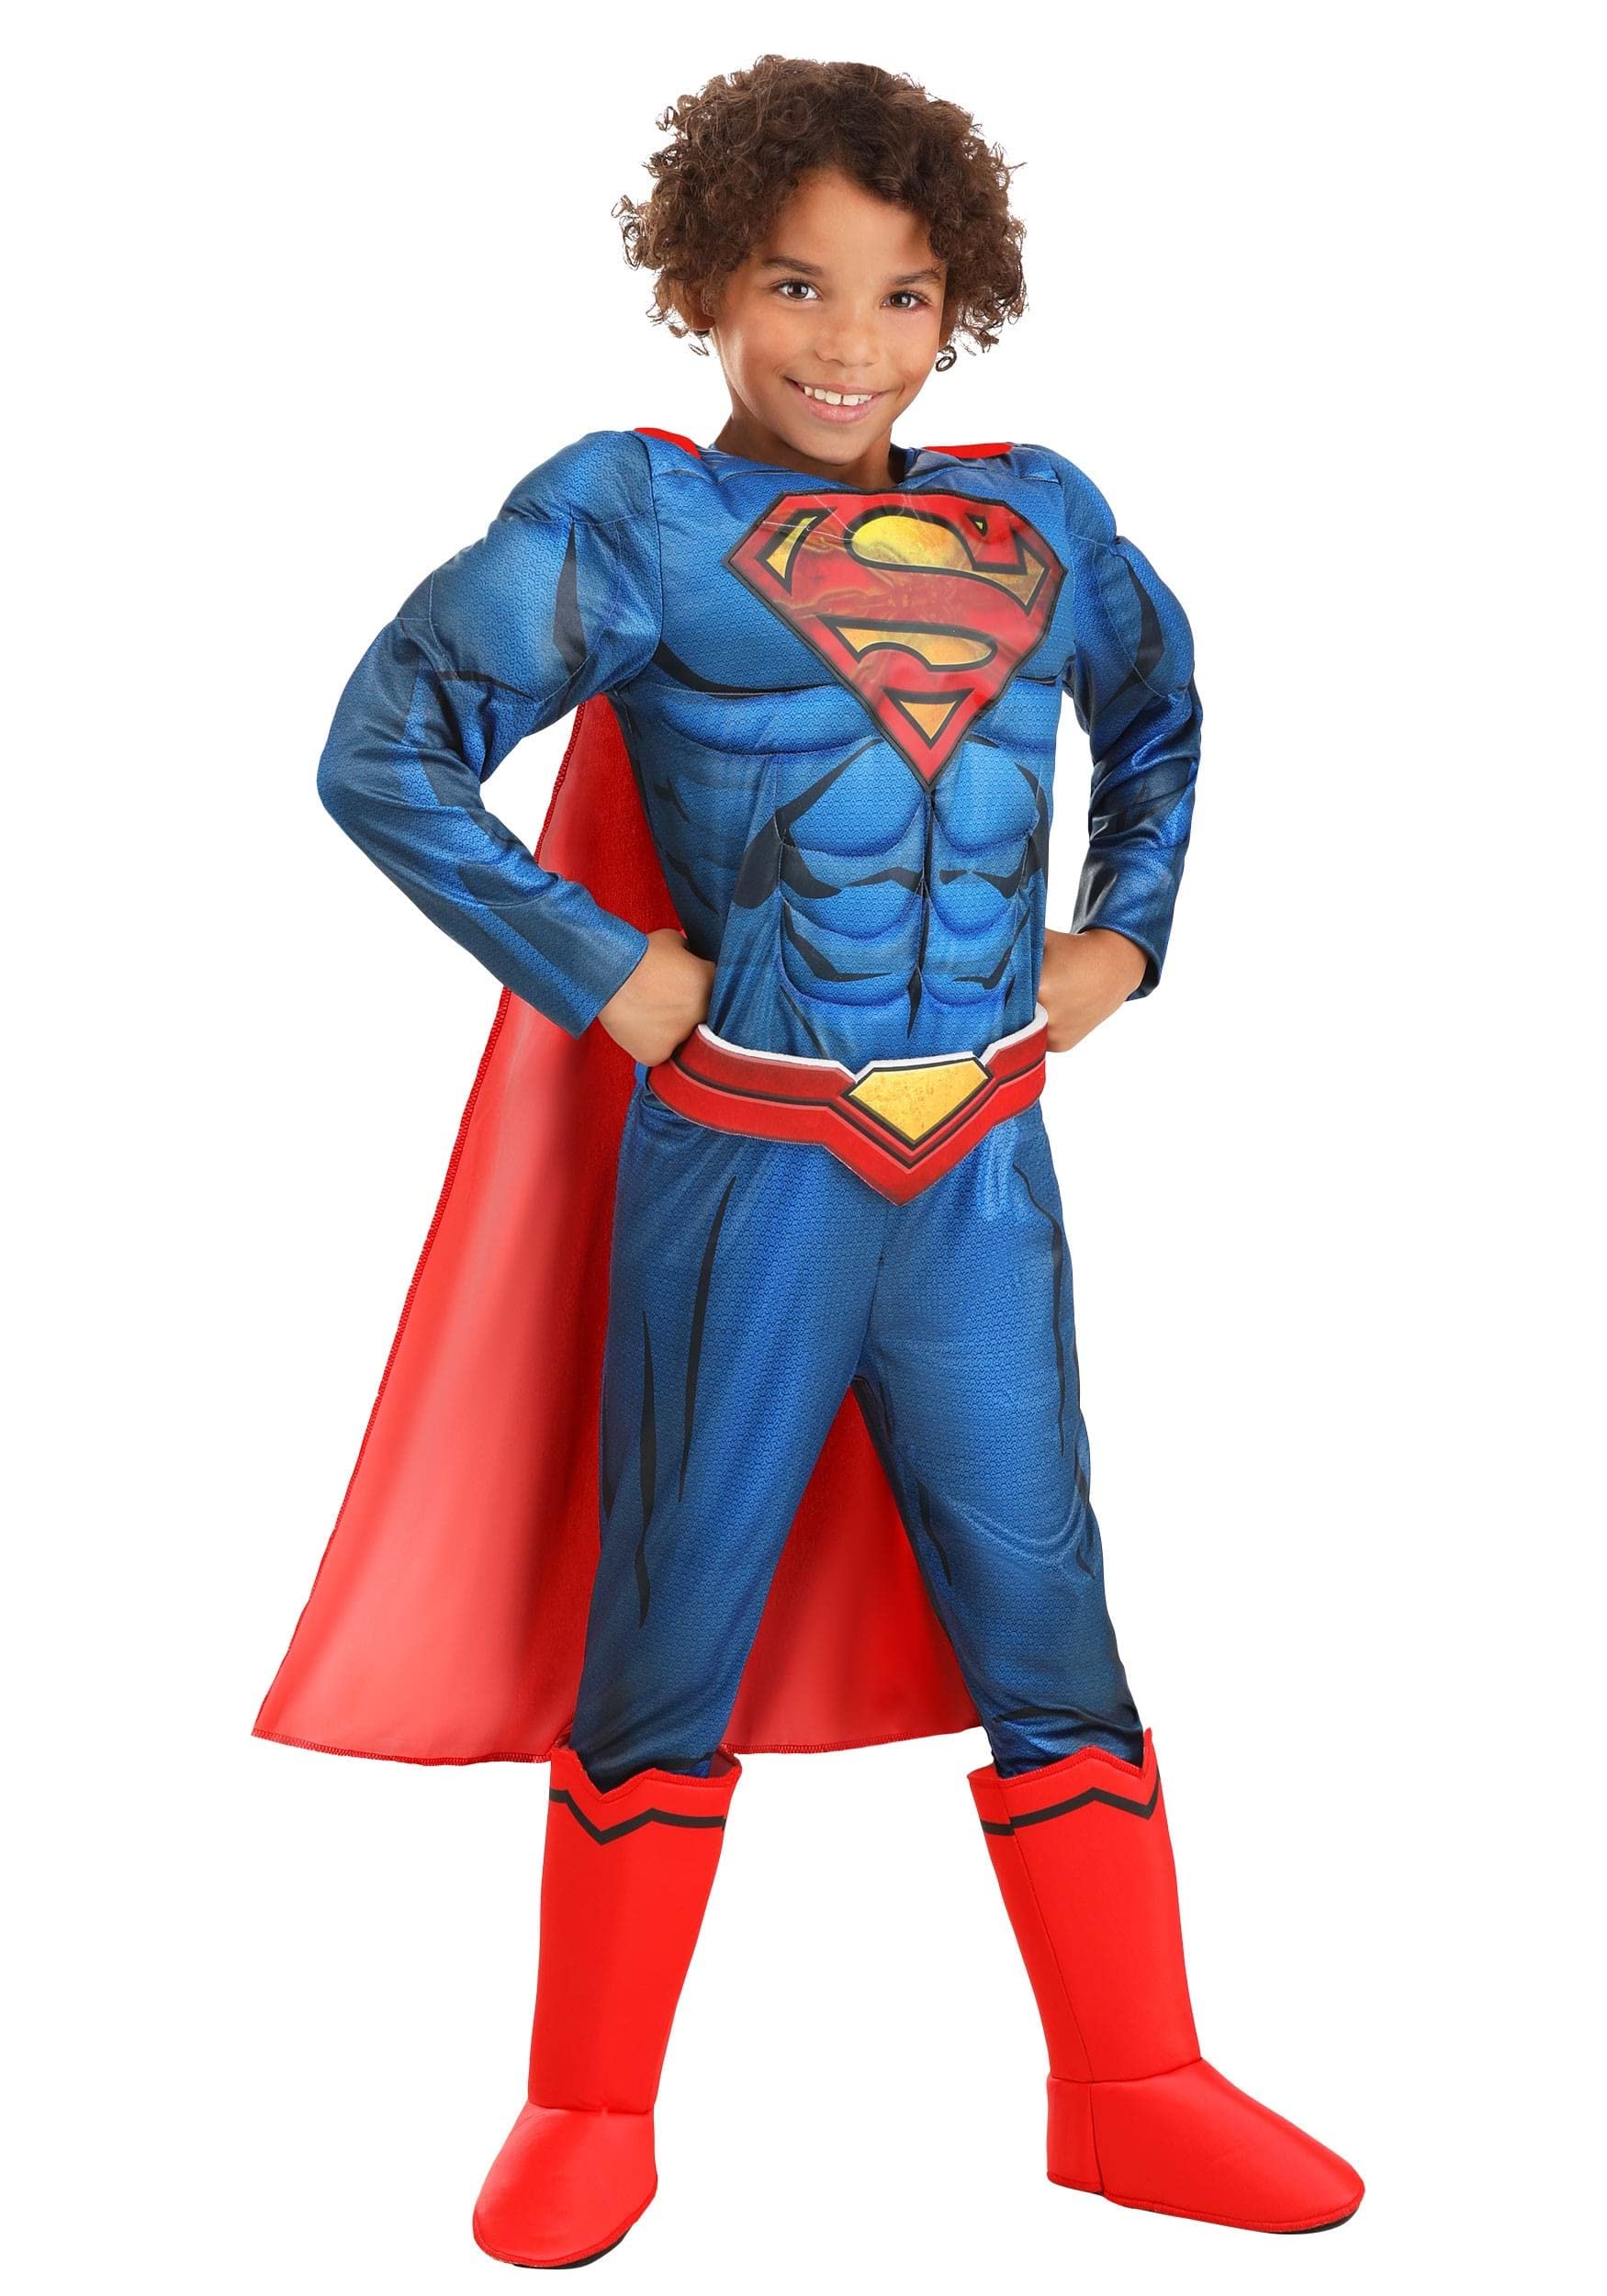 Deluxe DC Comics Superman Costume for Kids, Blue & Red Superhero Suit for Superhero Parties, Cosplay & Halloween